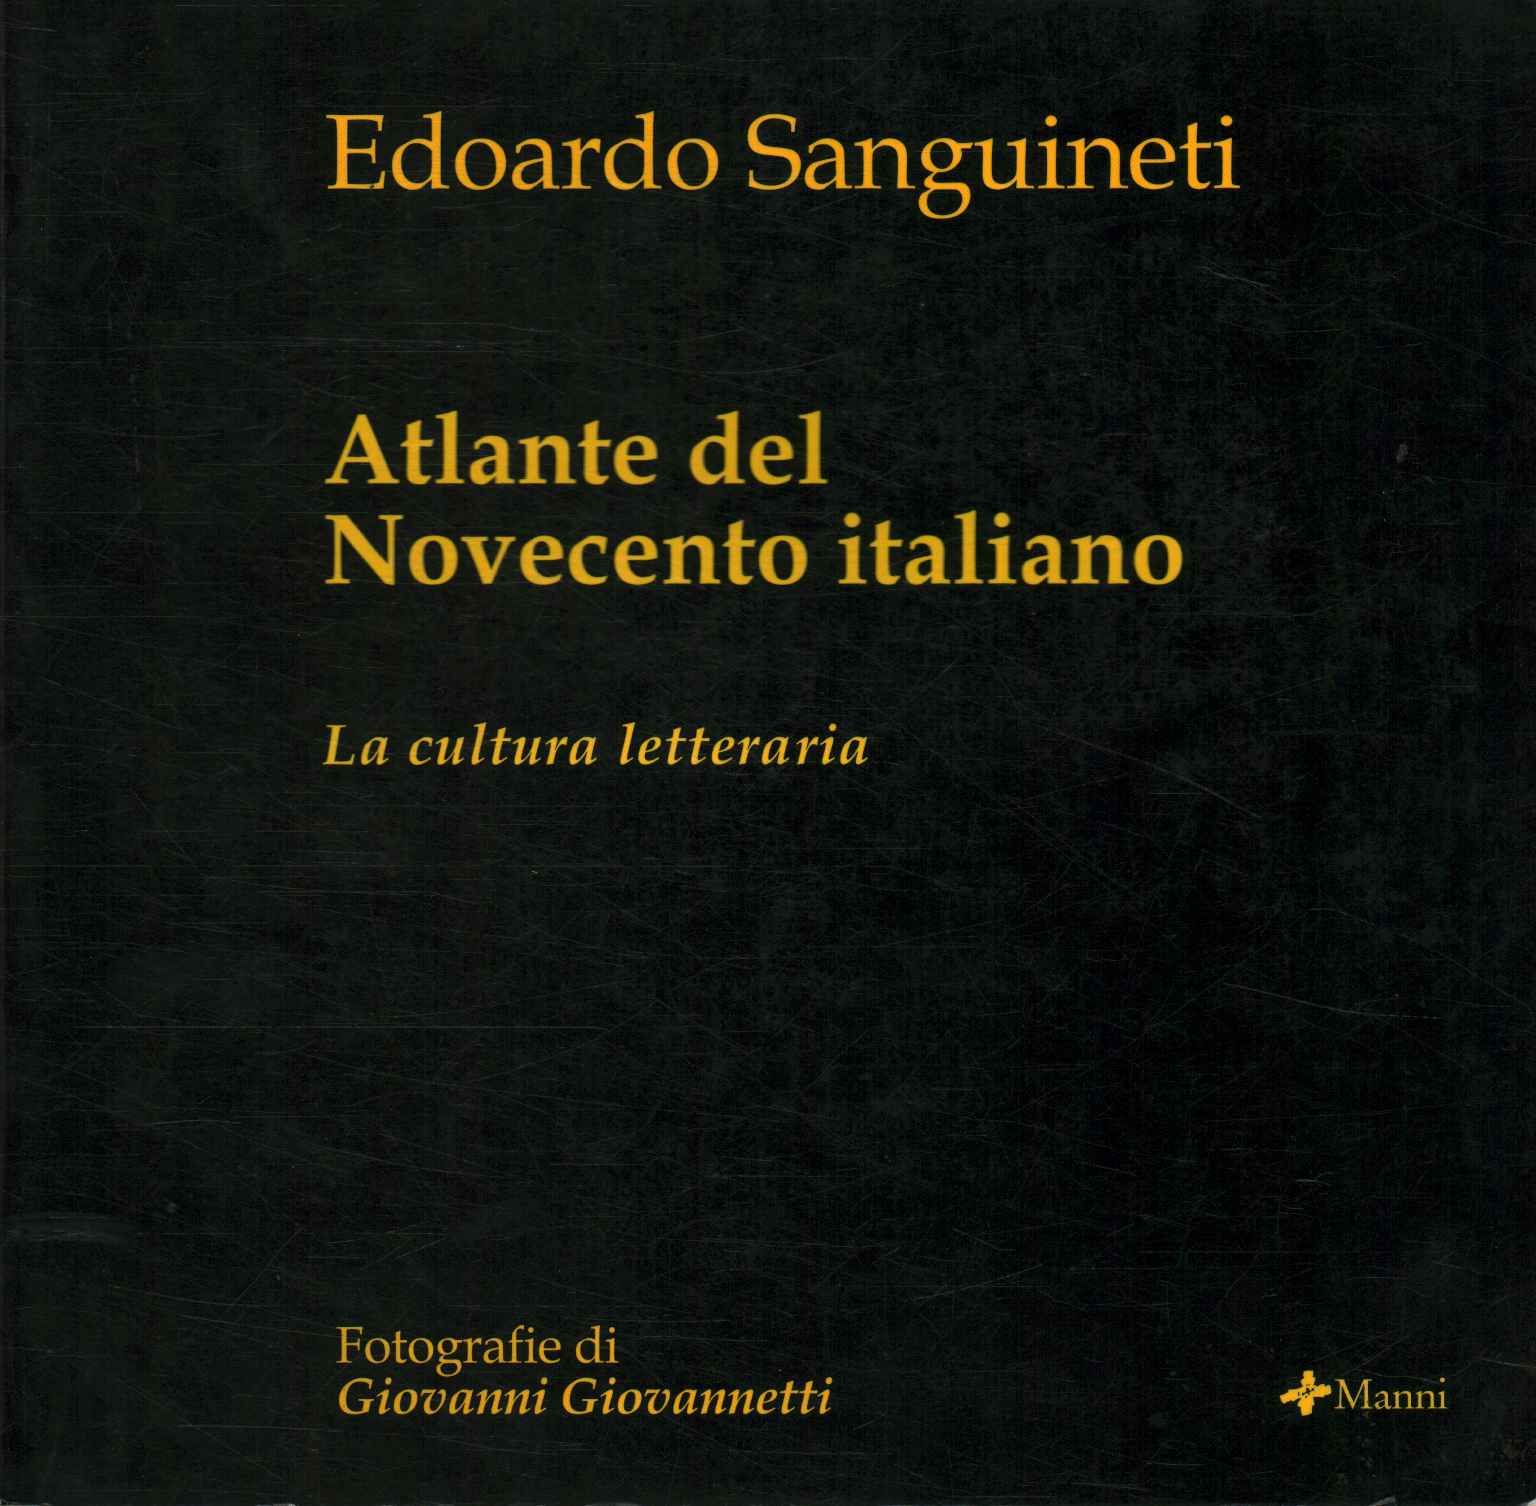 Atlas of the Italian twentieth century